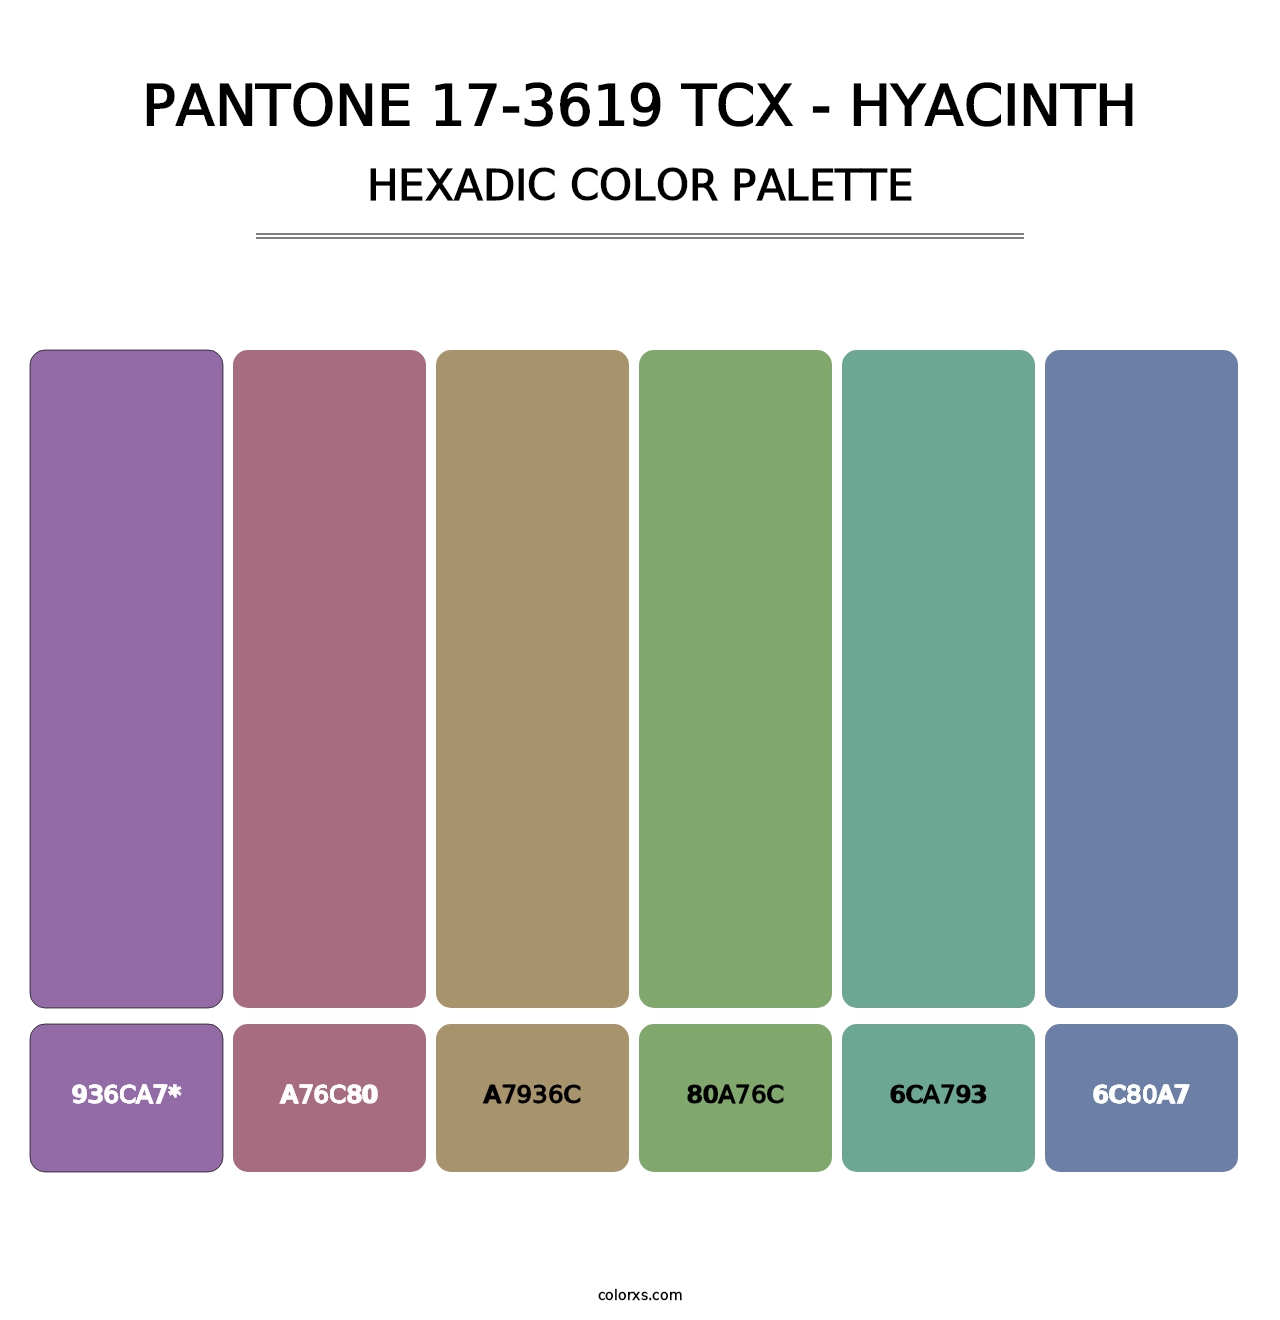 PANTONE 17-3619 TCX - Hyacinth - Hexadic Color Palette